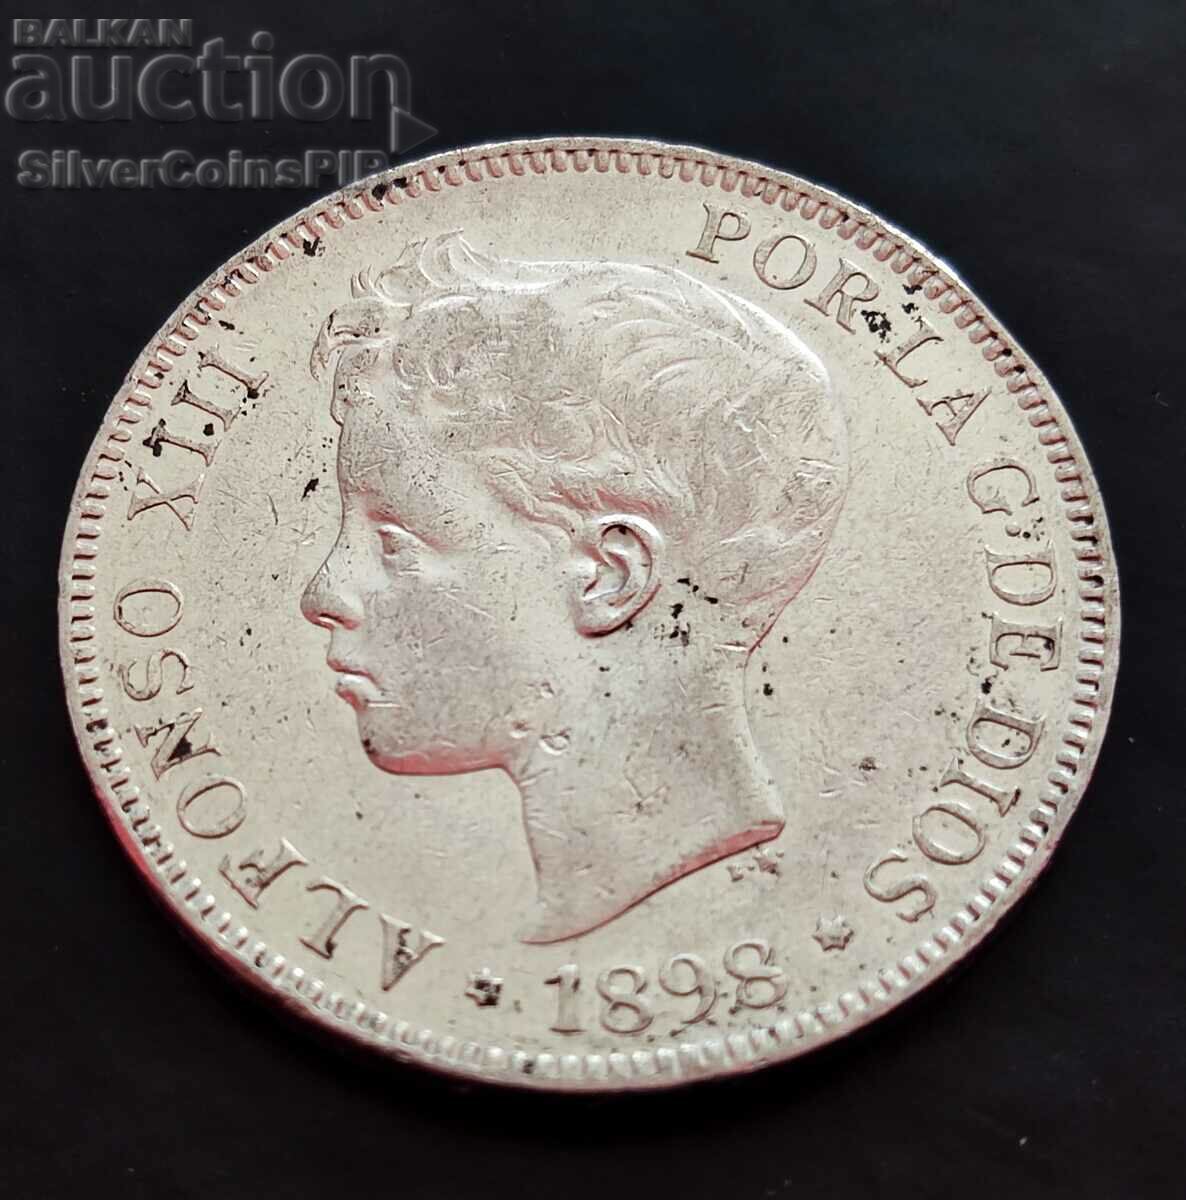 Argint 5 Pesetas 1898 Alfonso XIII Spania